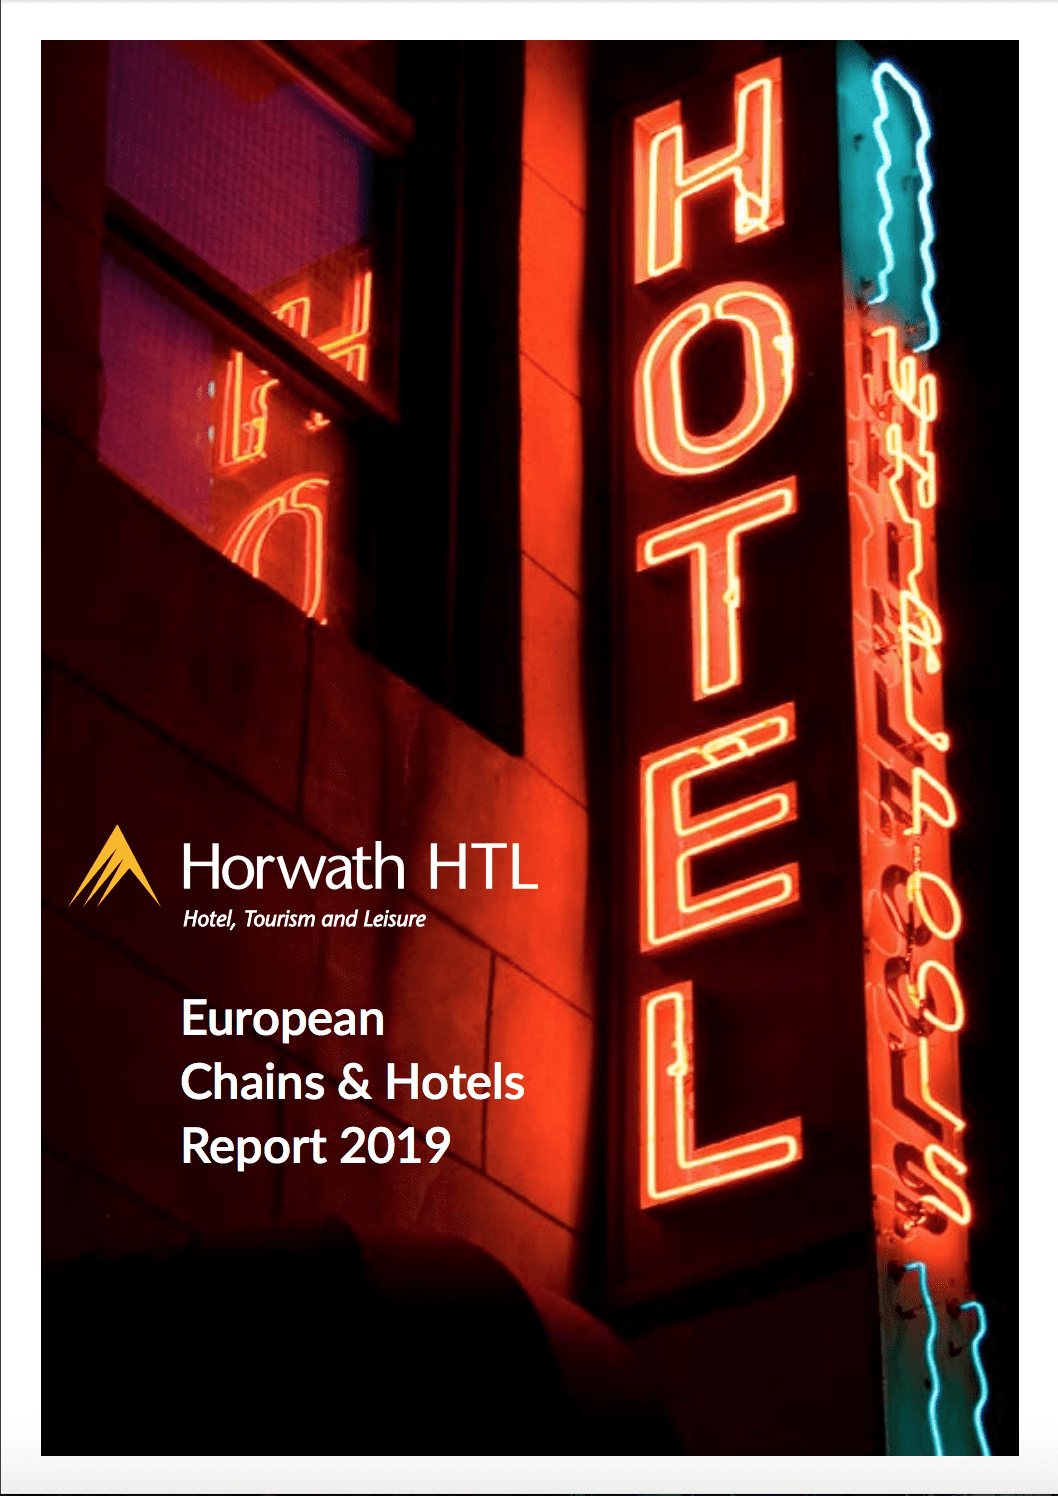 Press release: Hotel chains dominate Dutch market